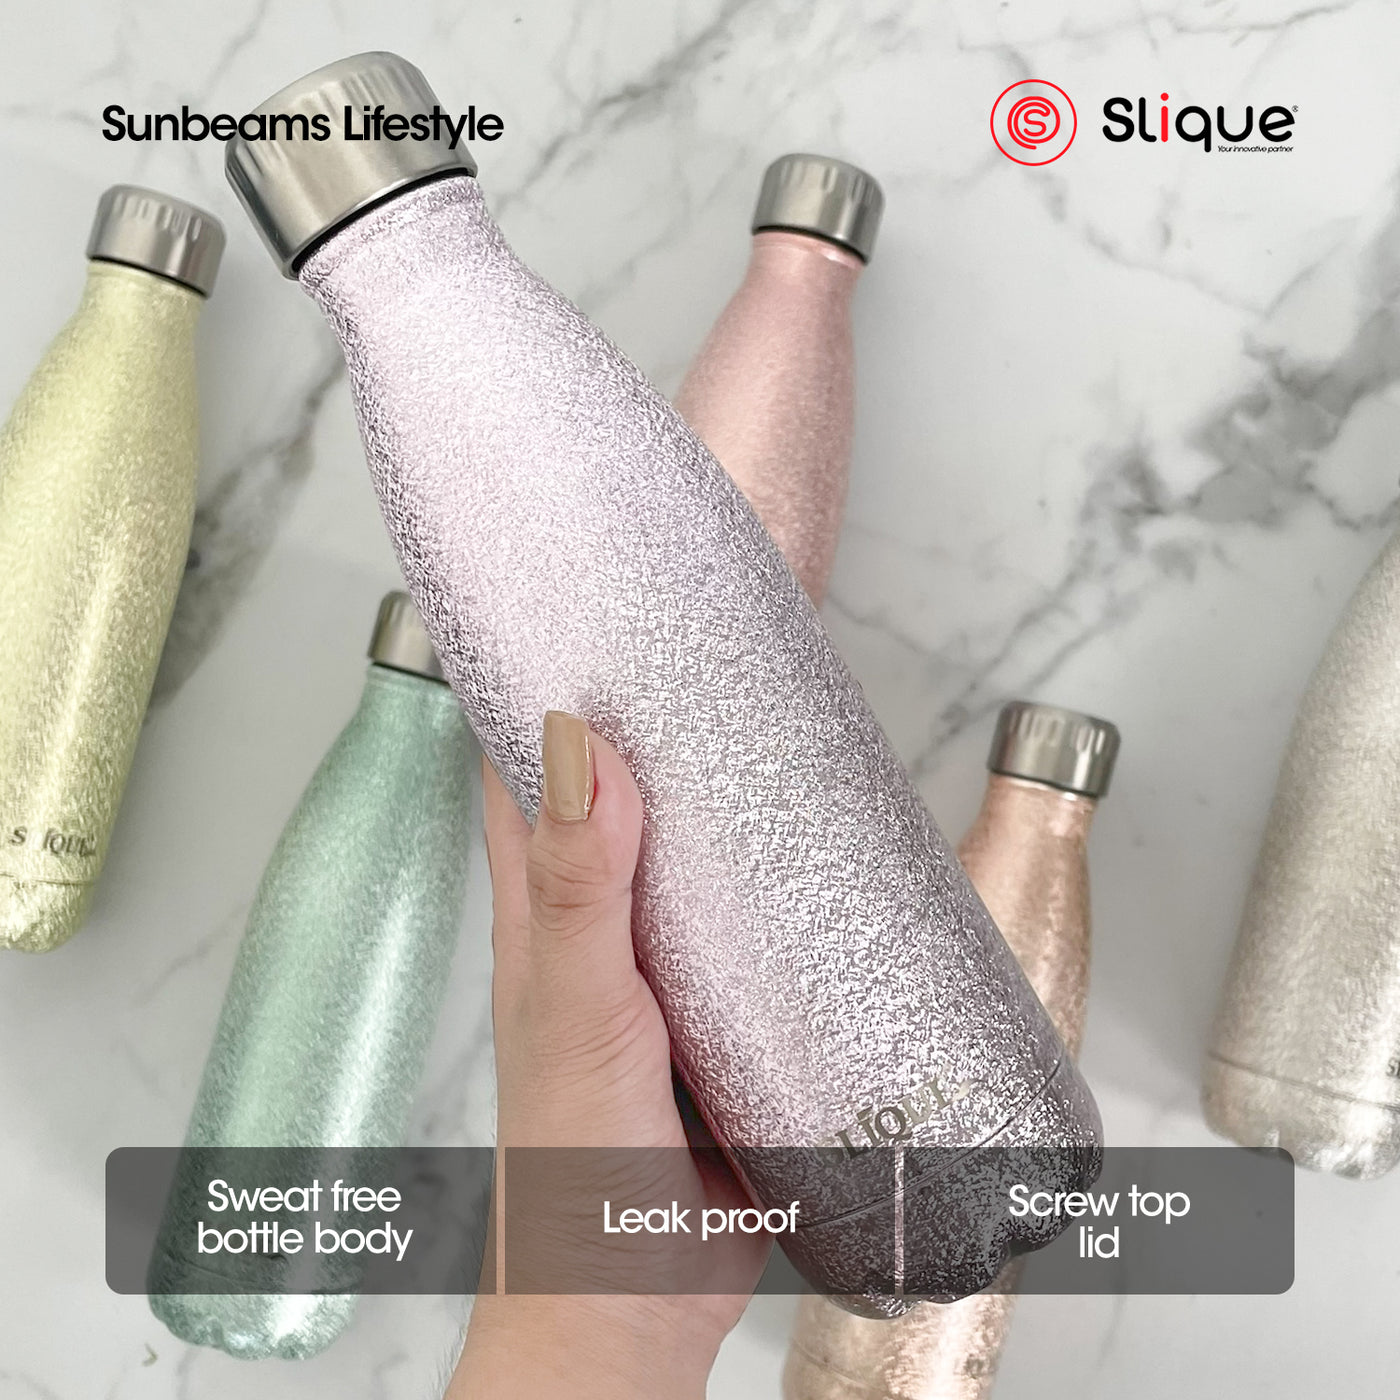 SLIQUE Stainless Steel Glitter Finish Insulated Water Bottle 500ml (Purple)